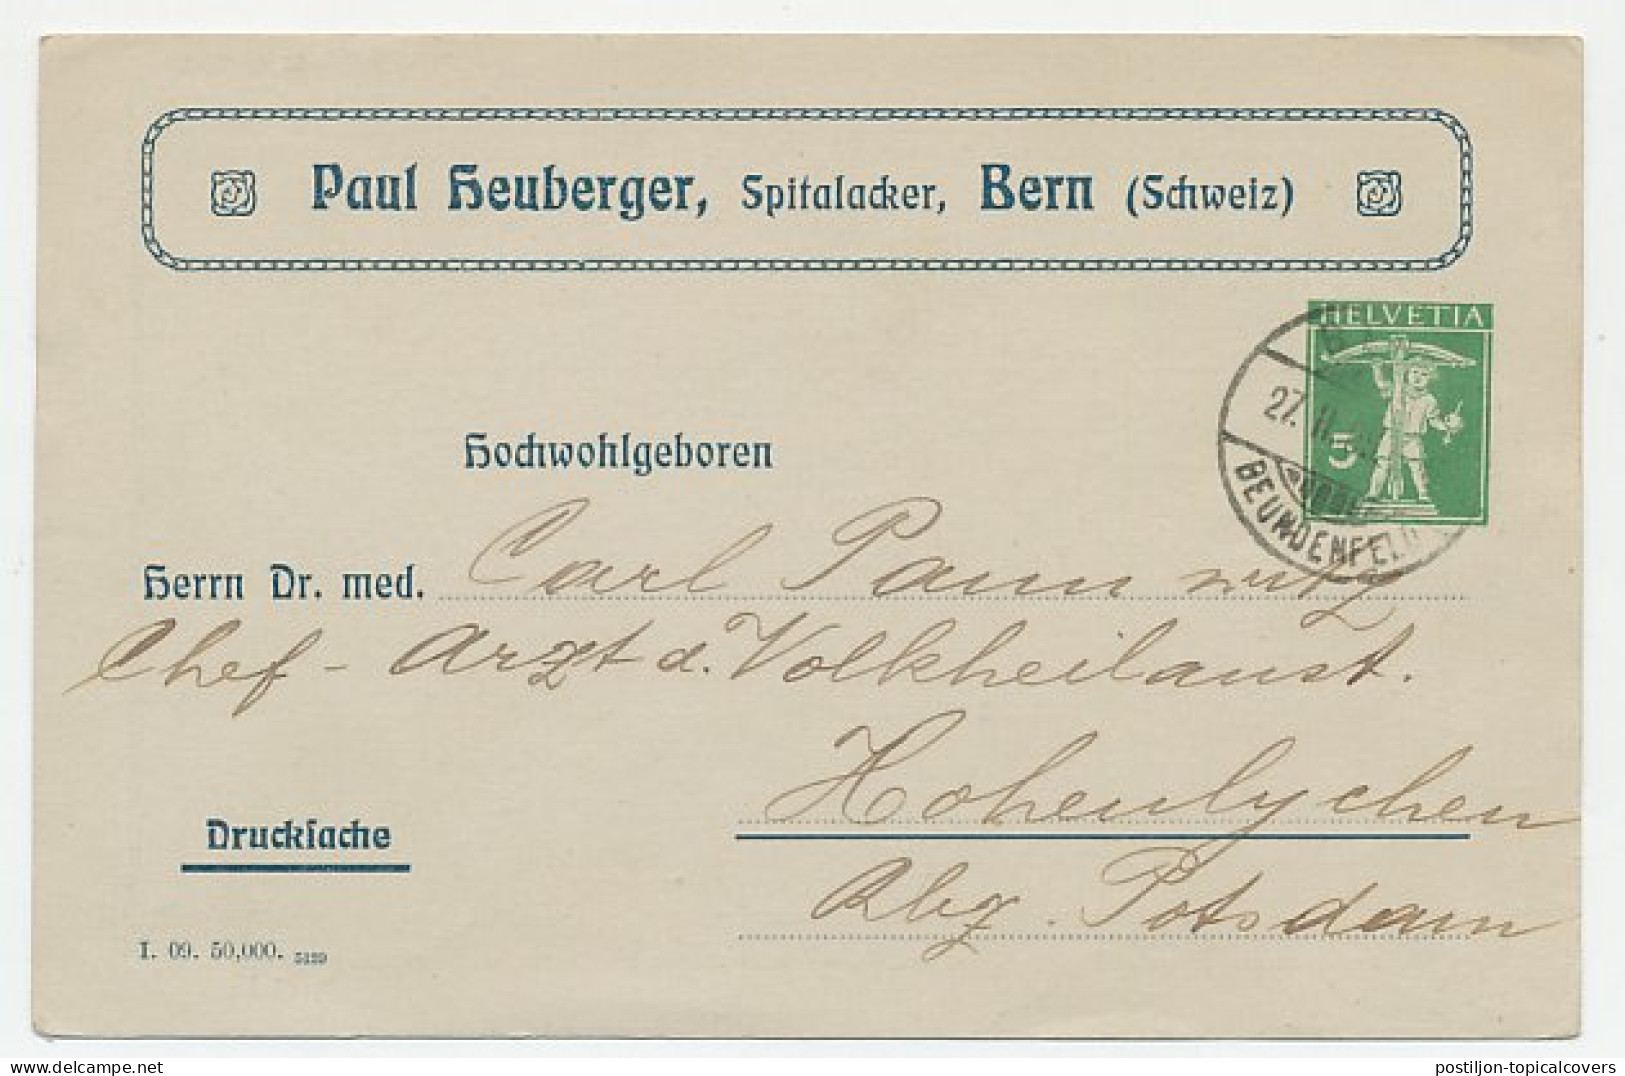 Postal Stationery Switzerland 1909 Kephir Pastilles - Mushroom - Alpine Milk - Pharmacie